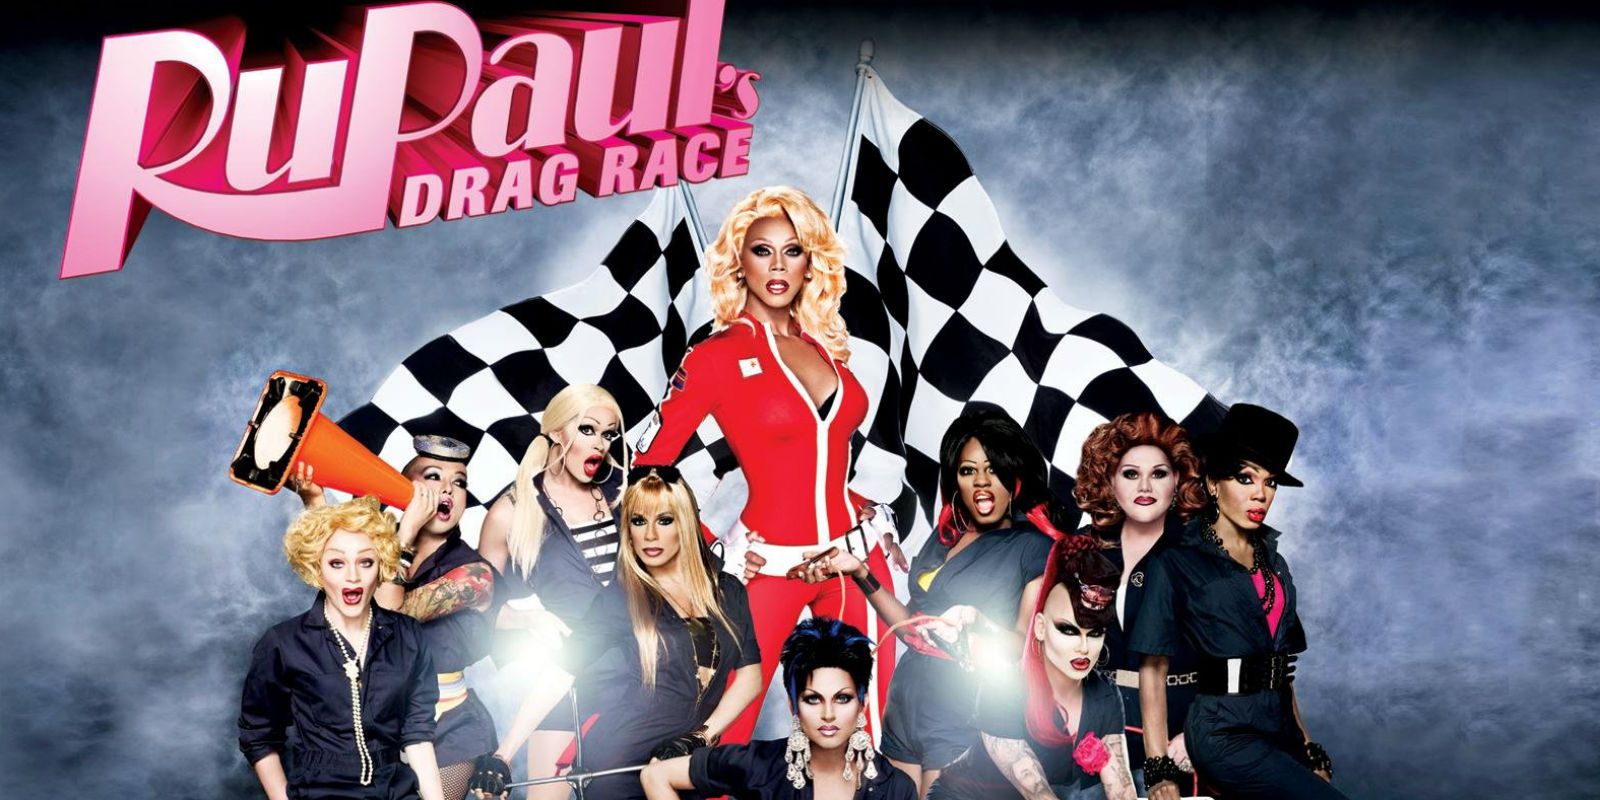 RuPauls Drag Race season 1